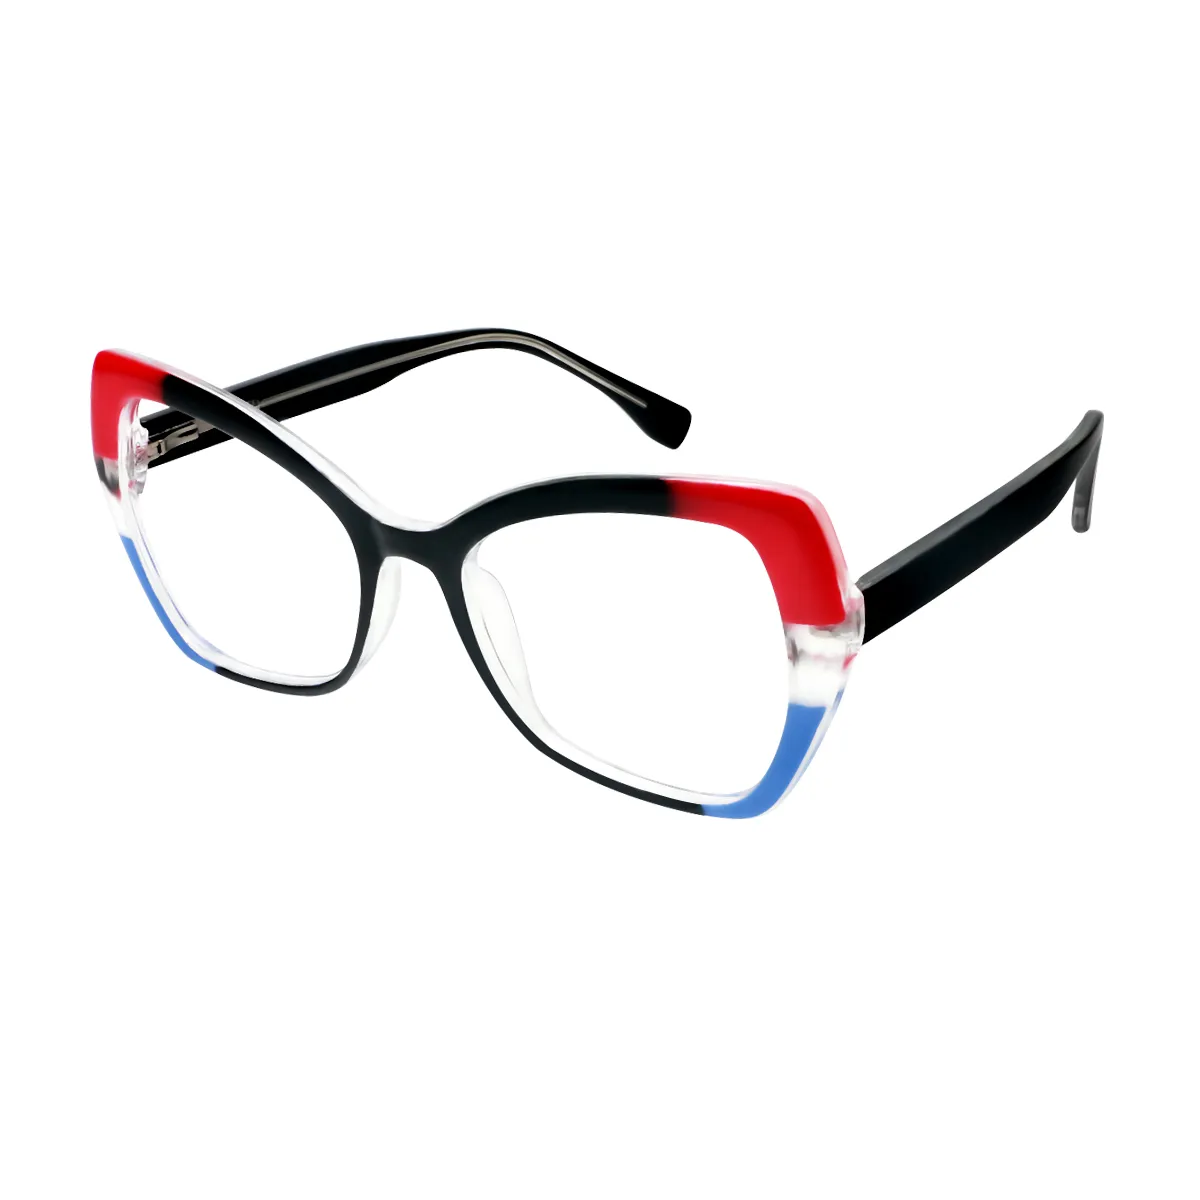 Fashion Cat-eye Black-Red Glasses for Women